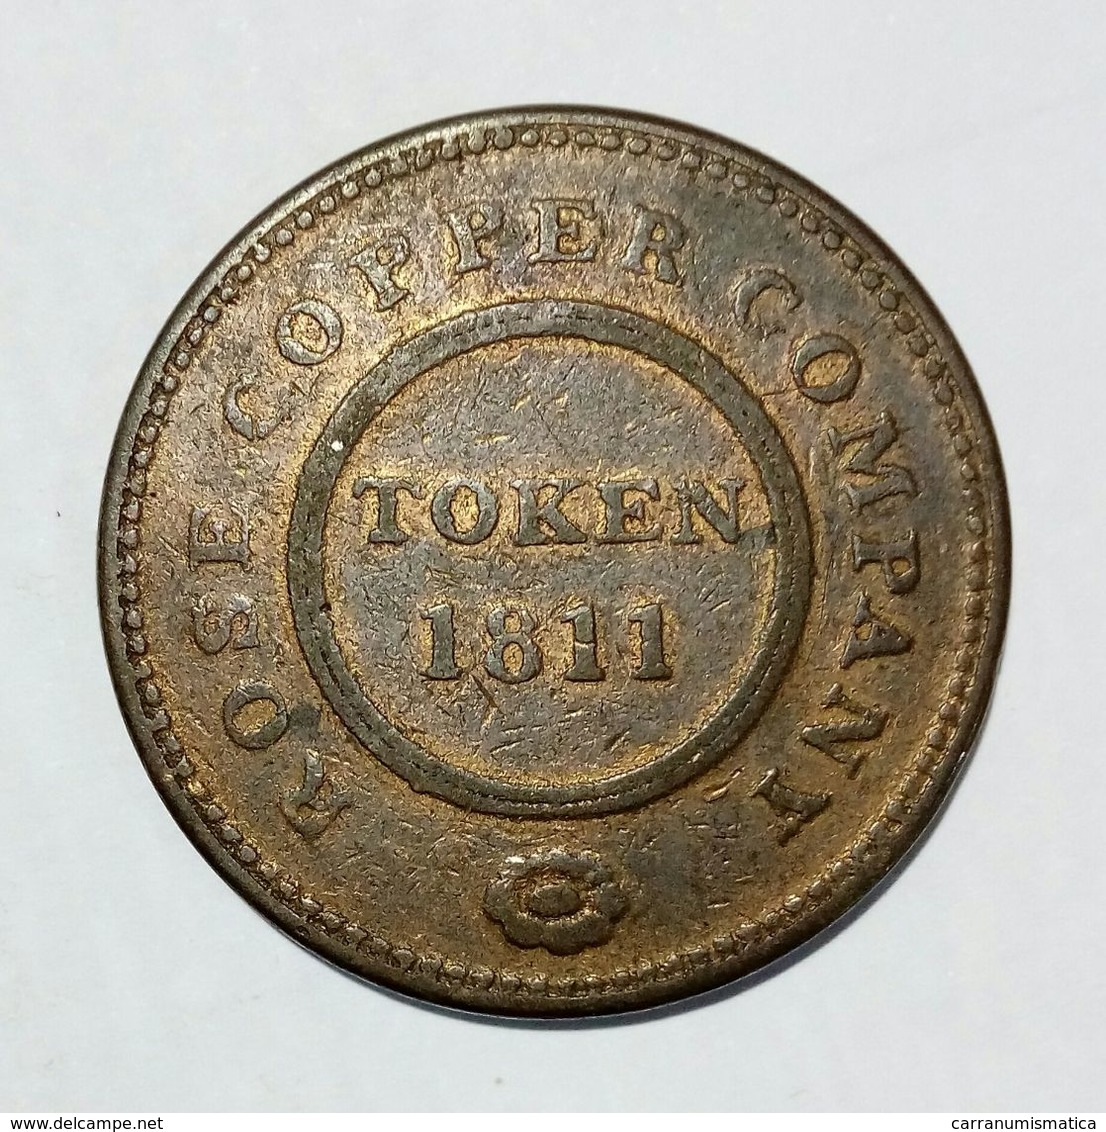 BIRMINGHAM & SWANSEA - ROSE COPPER COMPANY - HALF Penny Token ( 1811 ) / Copper - Monétaires/De Nécessité